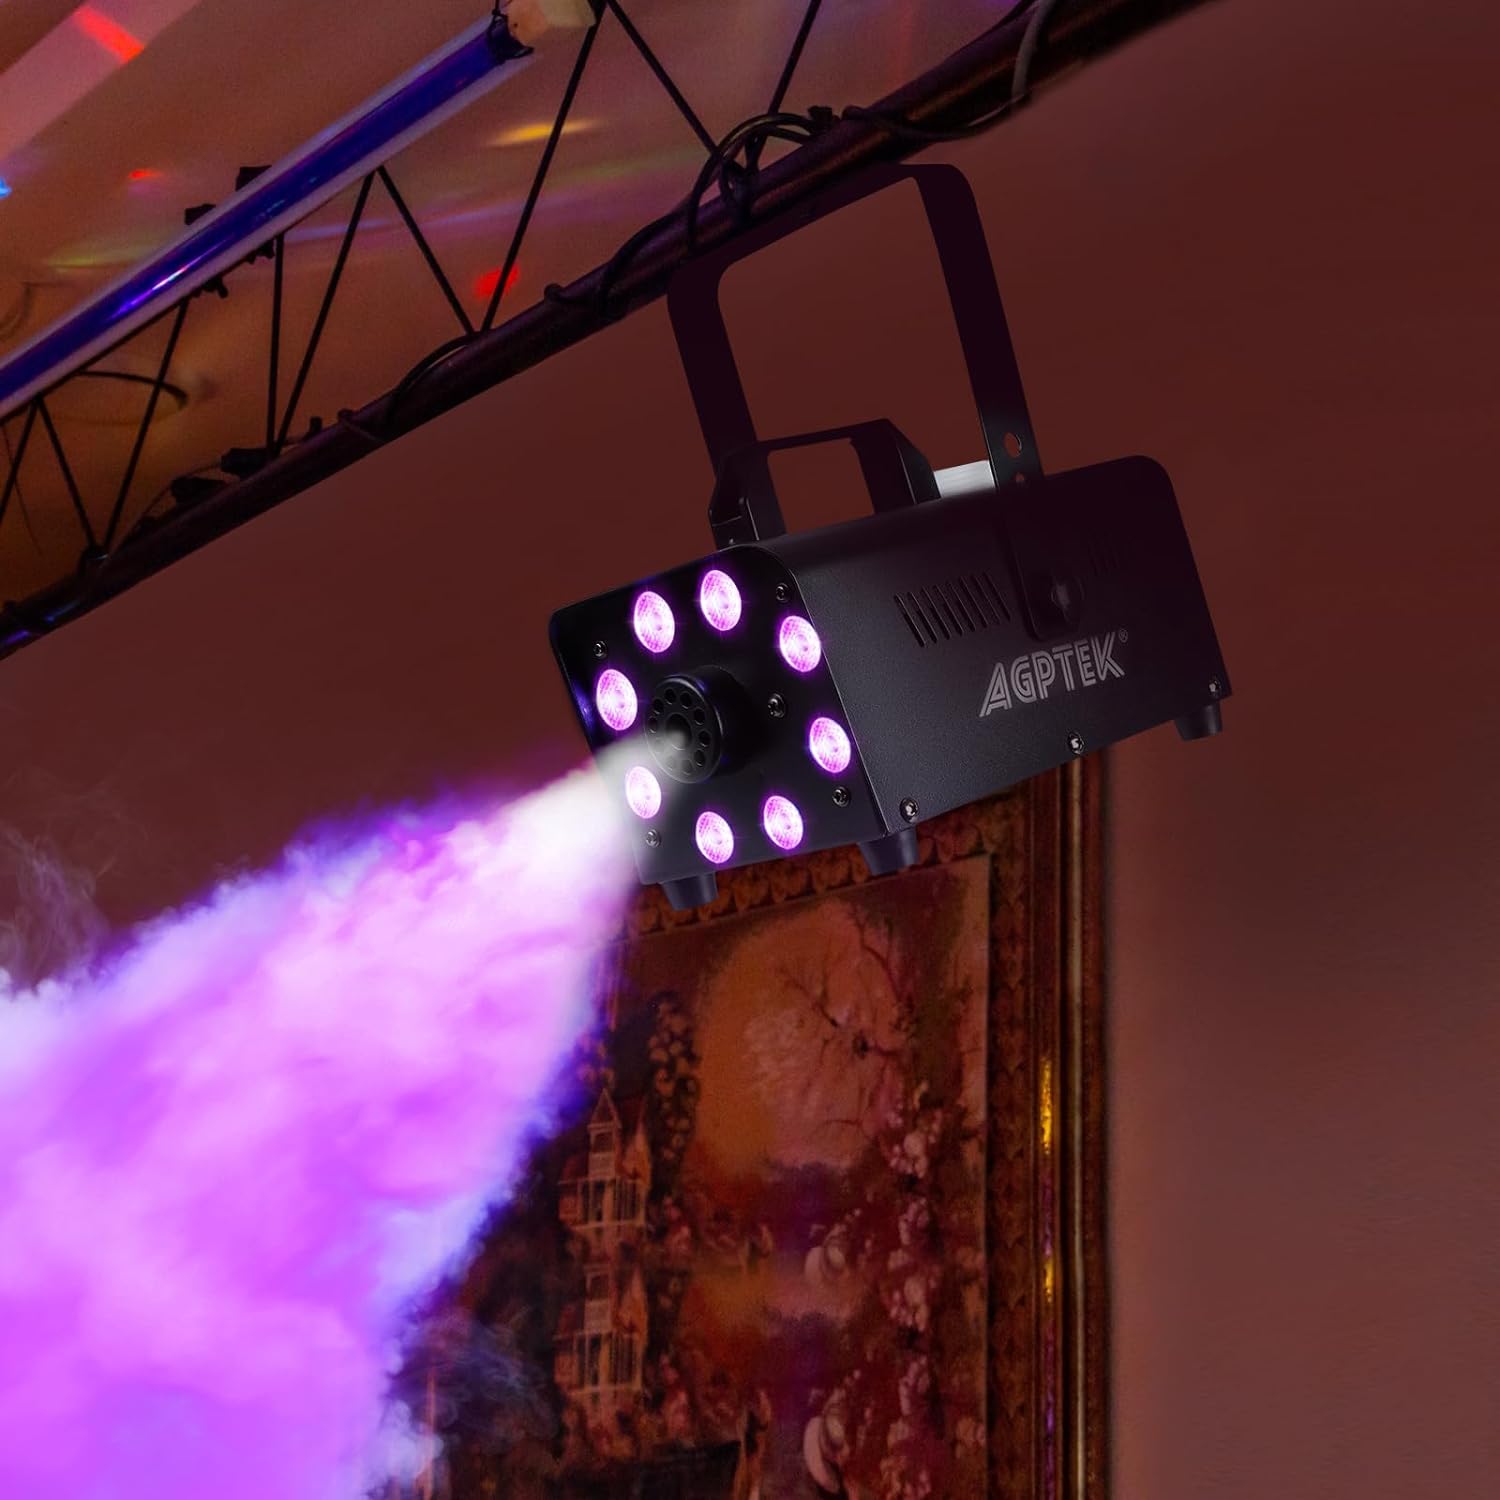 AGPTEK Smoke Machine, Fog Machine with 13 Colorful LED Lights Effect - $50